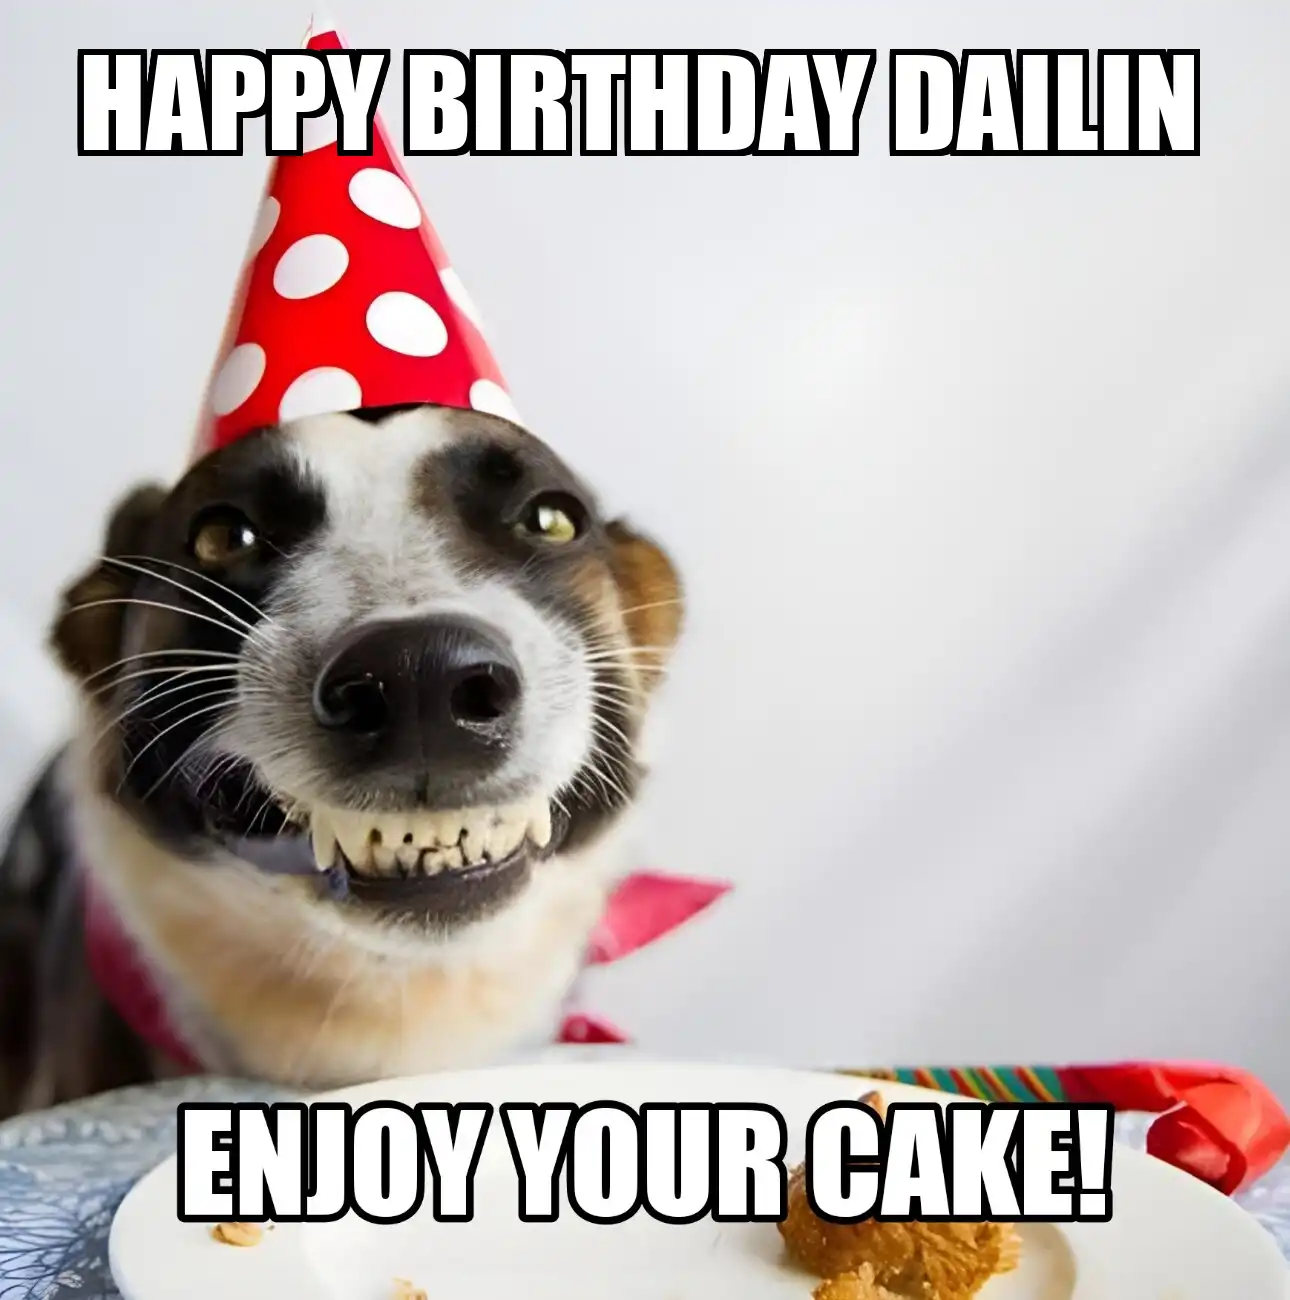 Happy Birthday Dailin Enjoy Your Cake Dog Meme